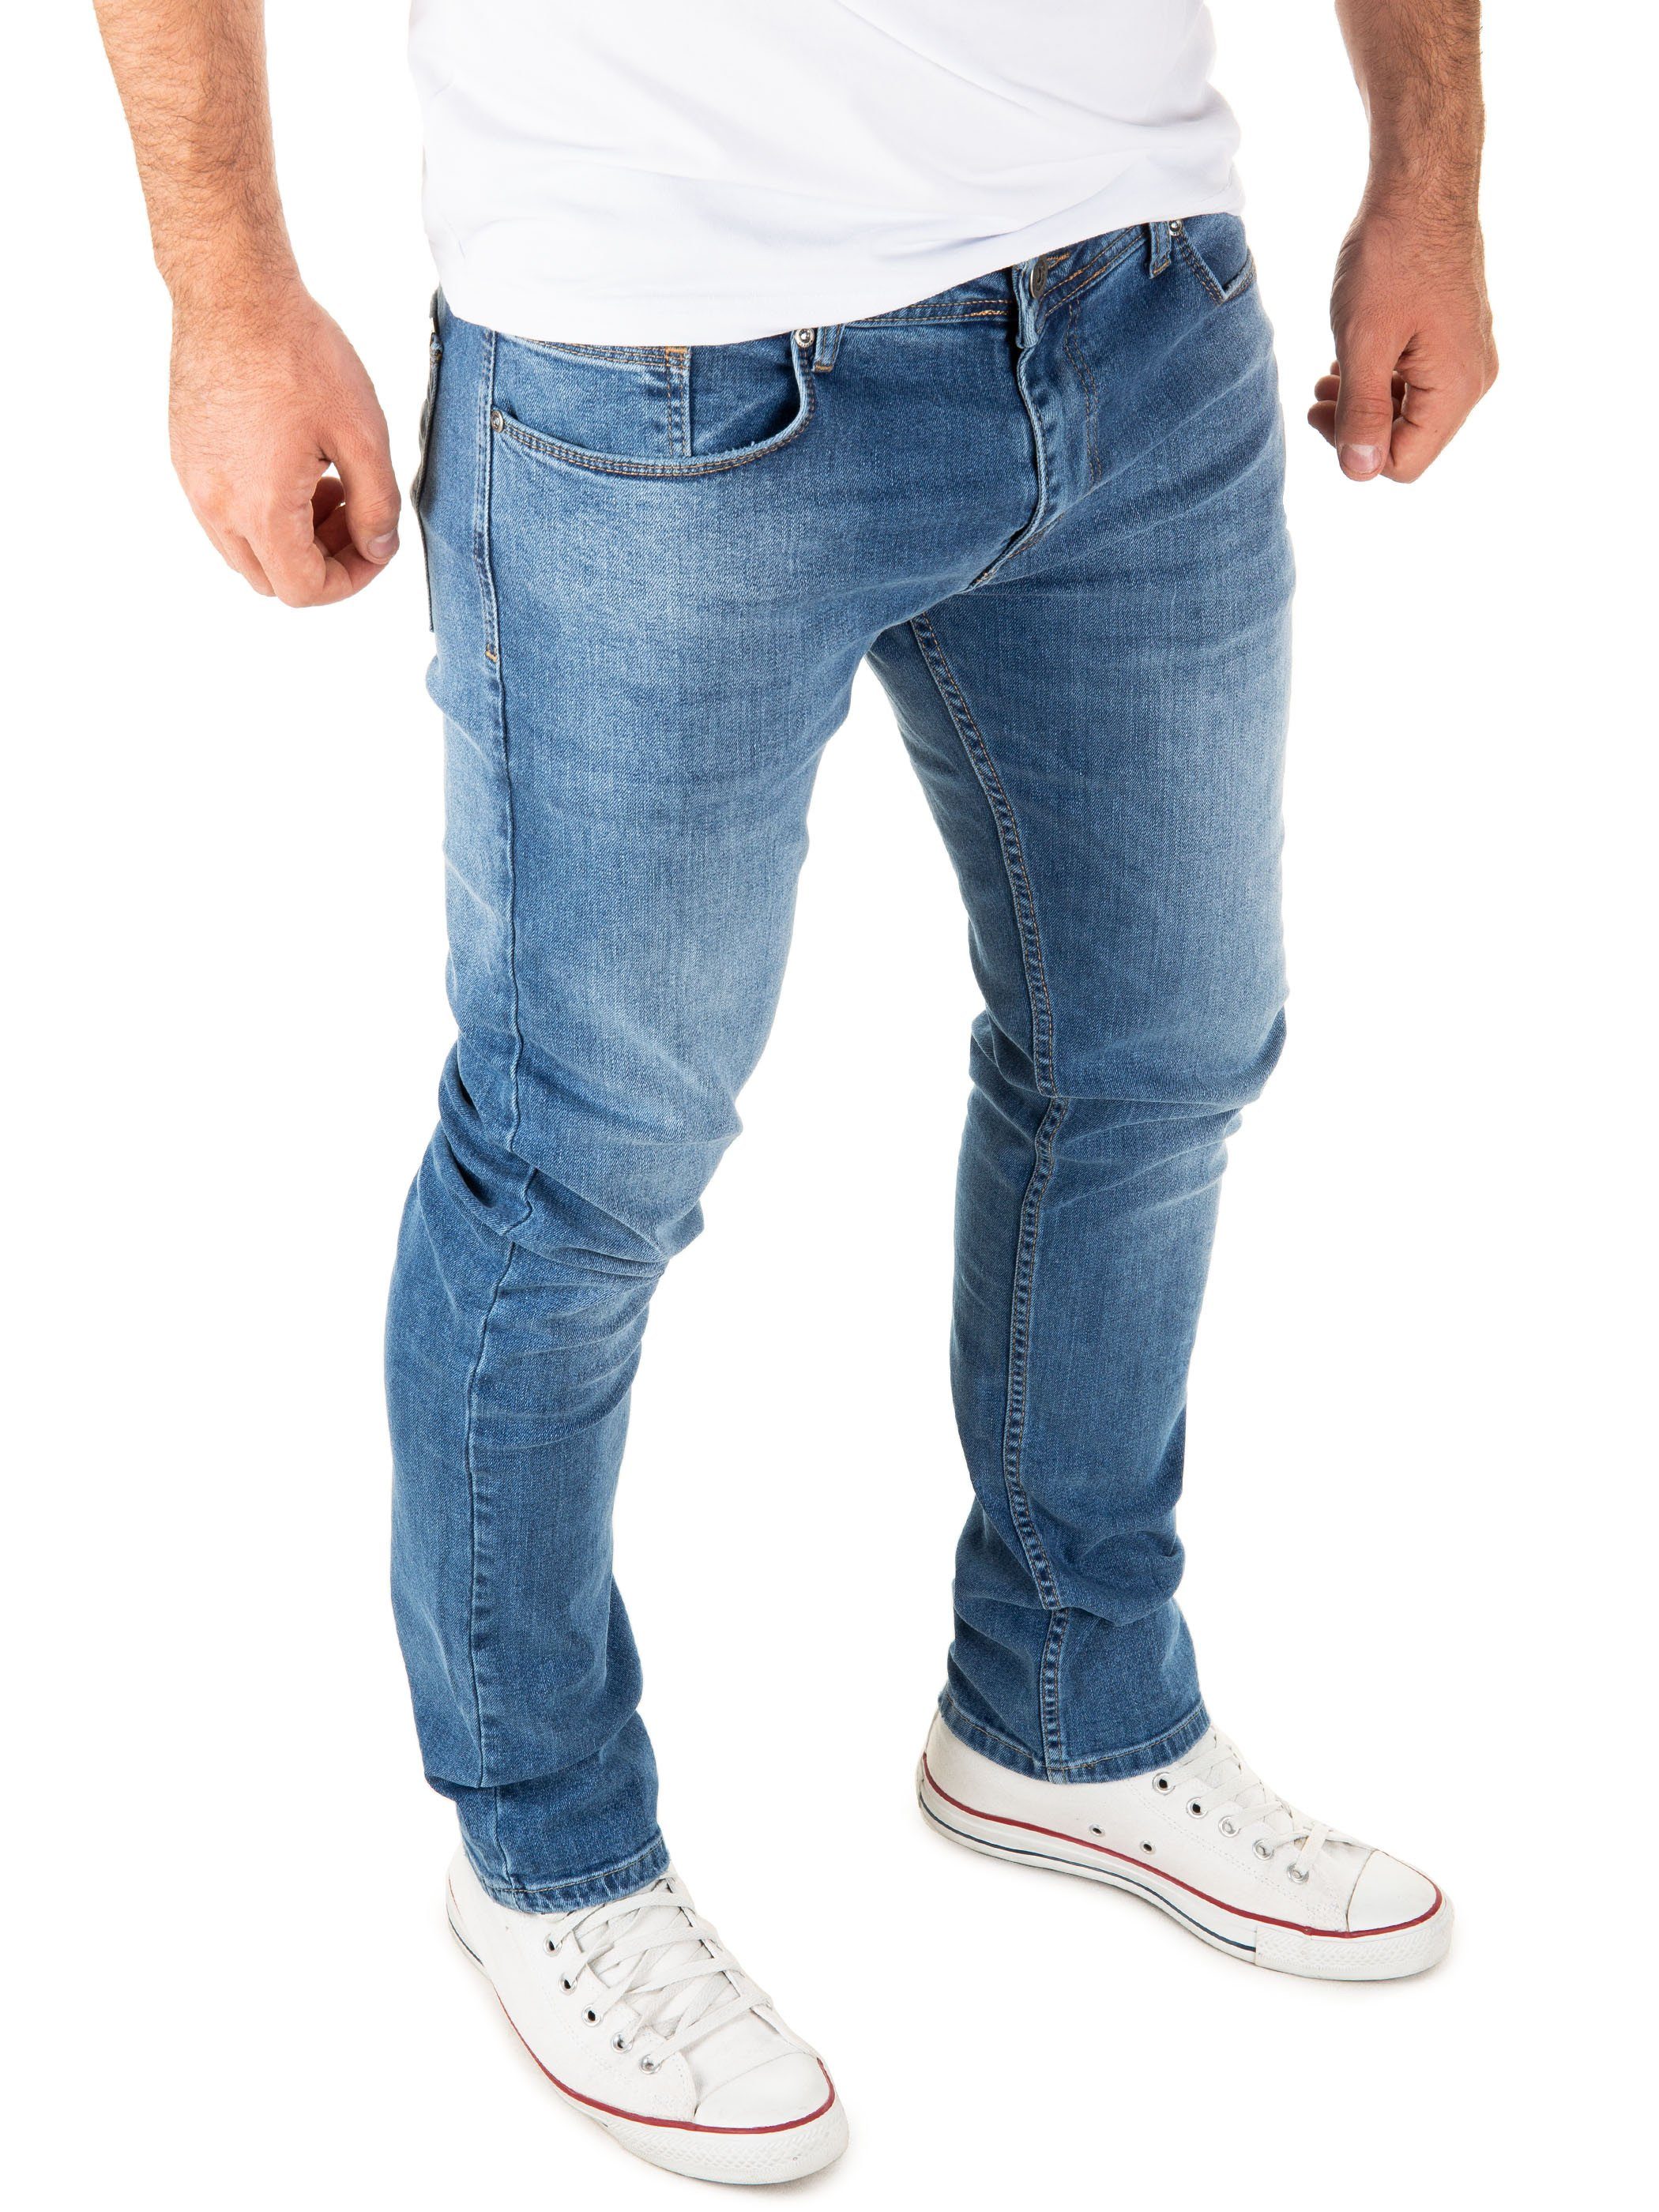 WOTEGA Slim-fit-Jeans Stretch Jeanshose Justin Herren Jeans mit Stretchanteil Blau (Bijou Blue 183921)